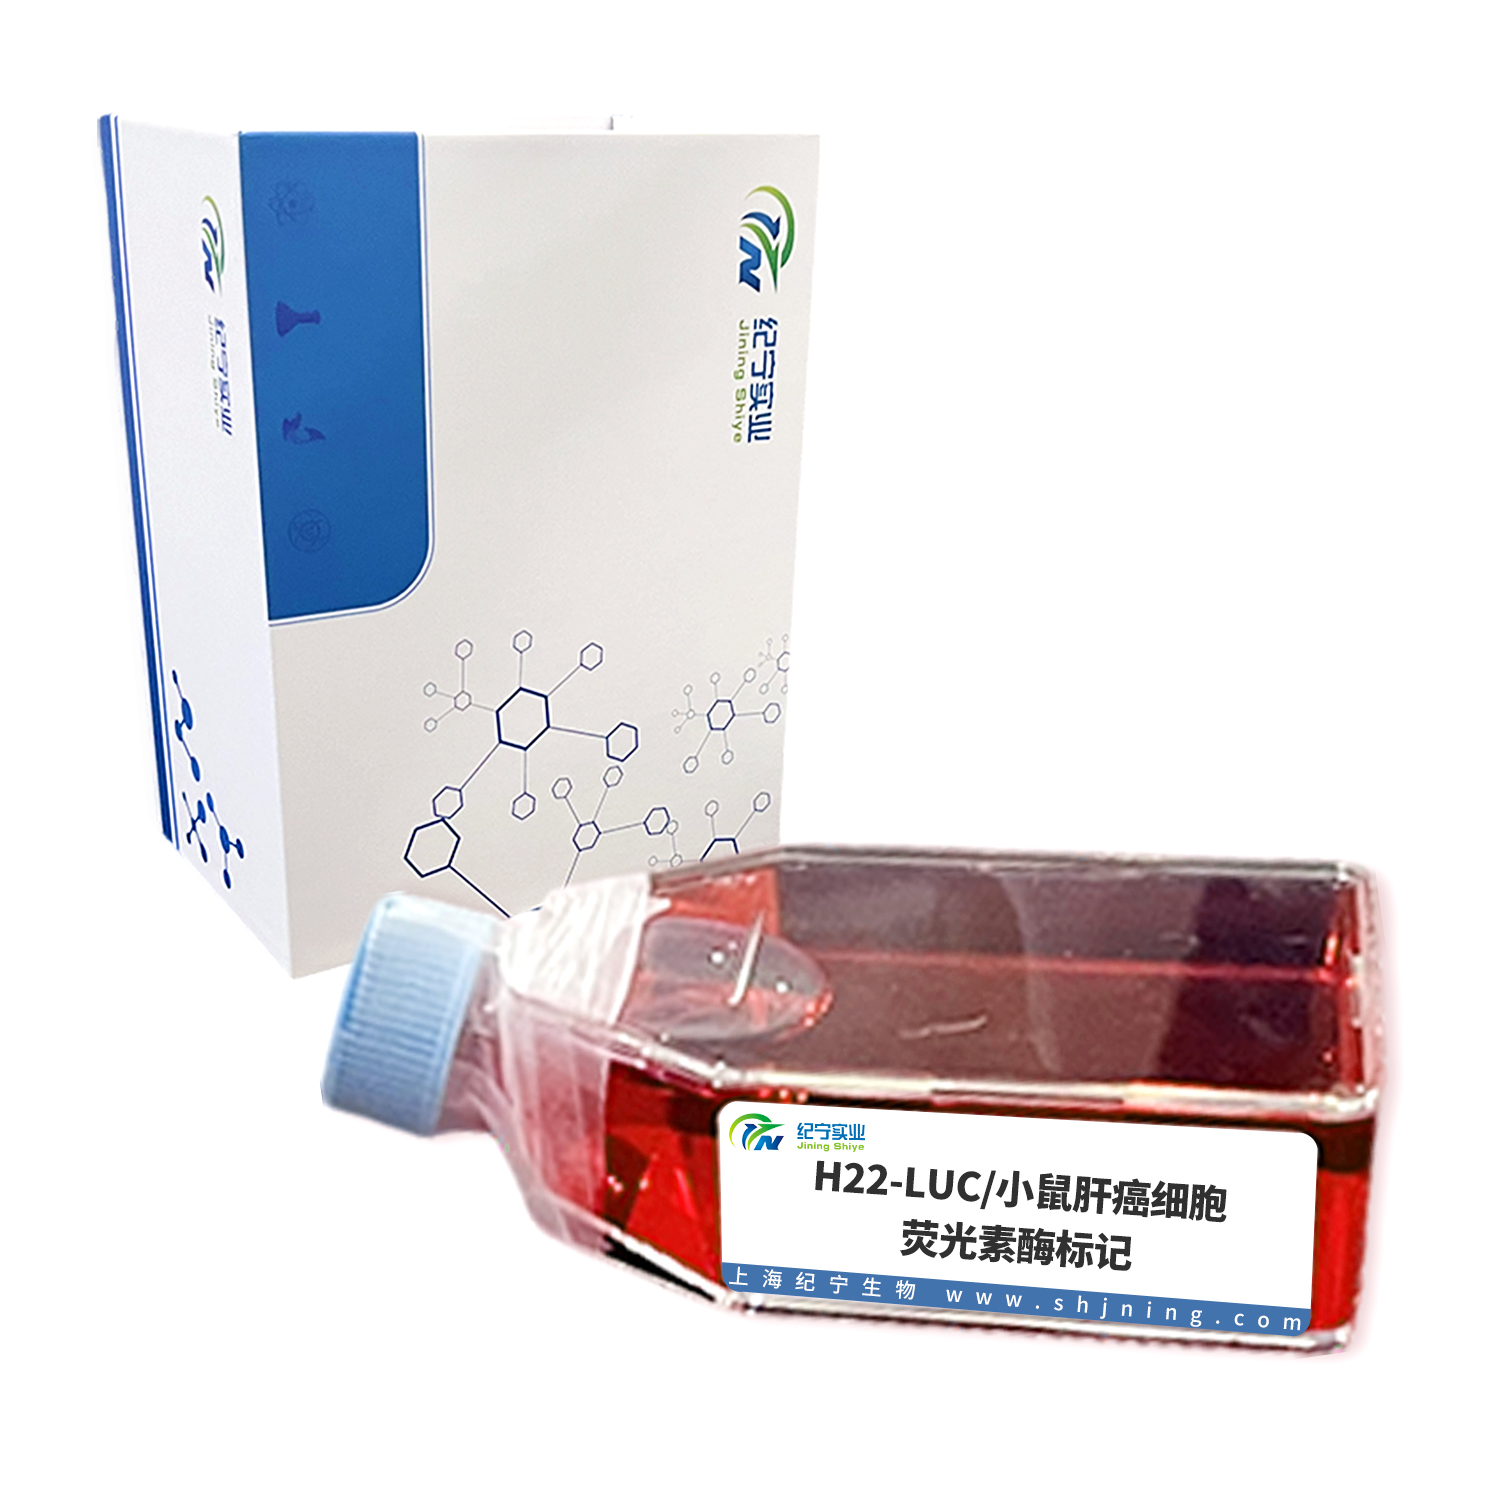 H22-LUC/小鼠肝癌细胞-荧光素酶标记